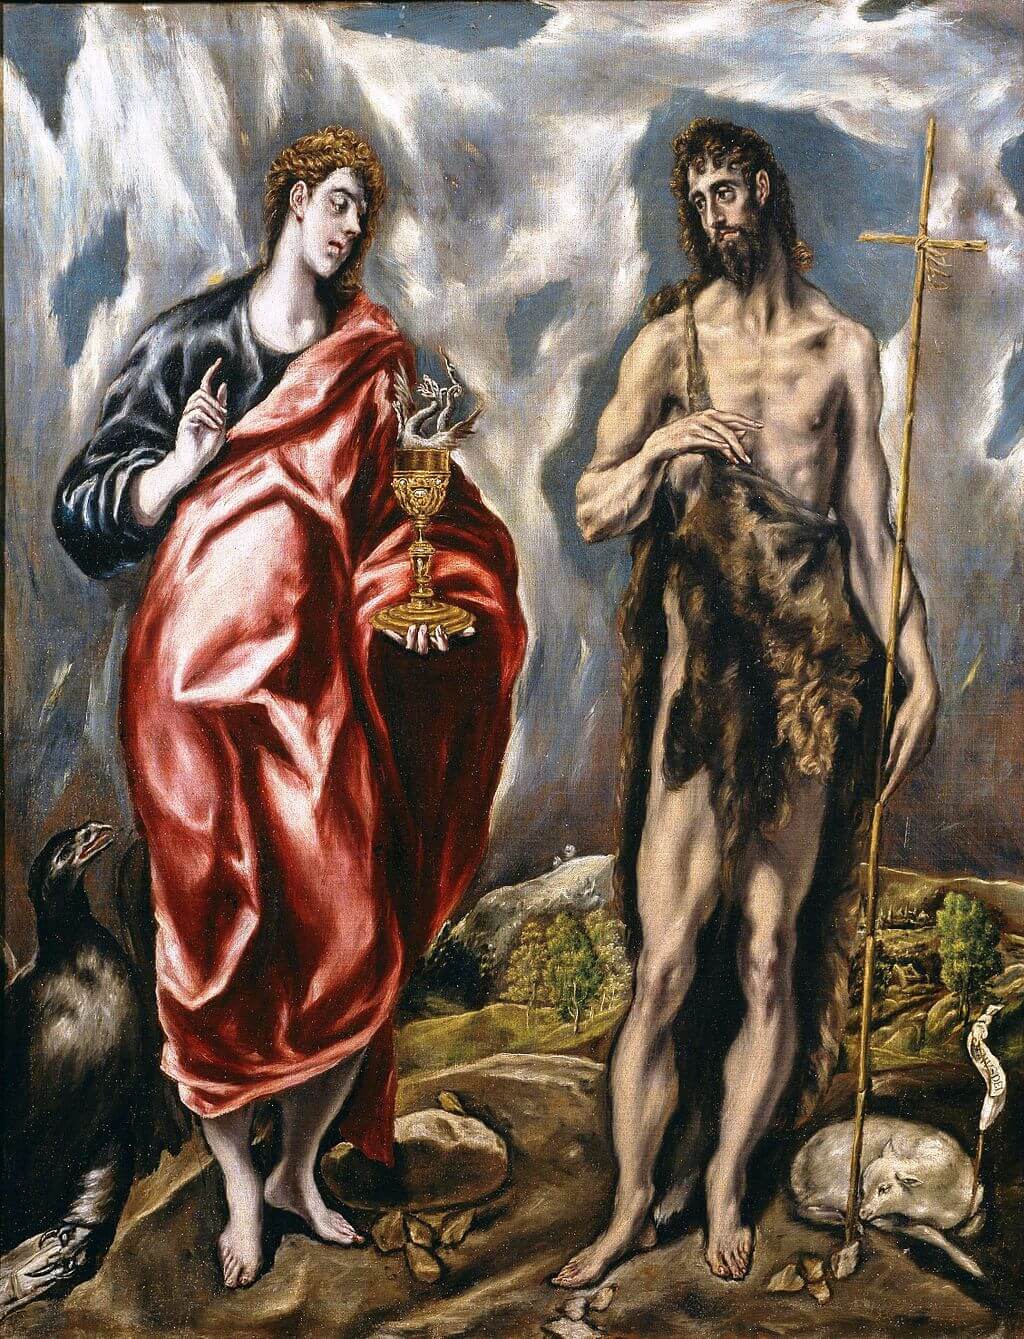 Saint john the Evangelist and Saint John the Baptist by El Greco in Toledo